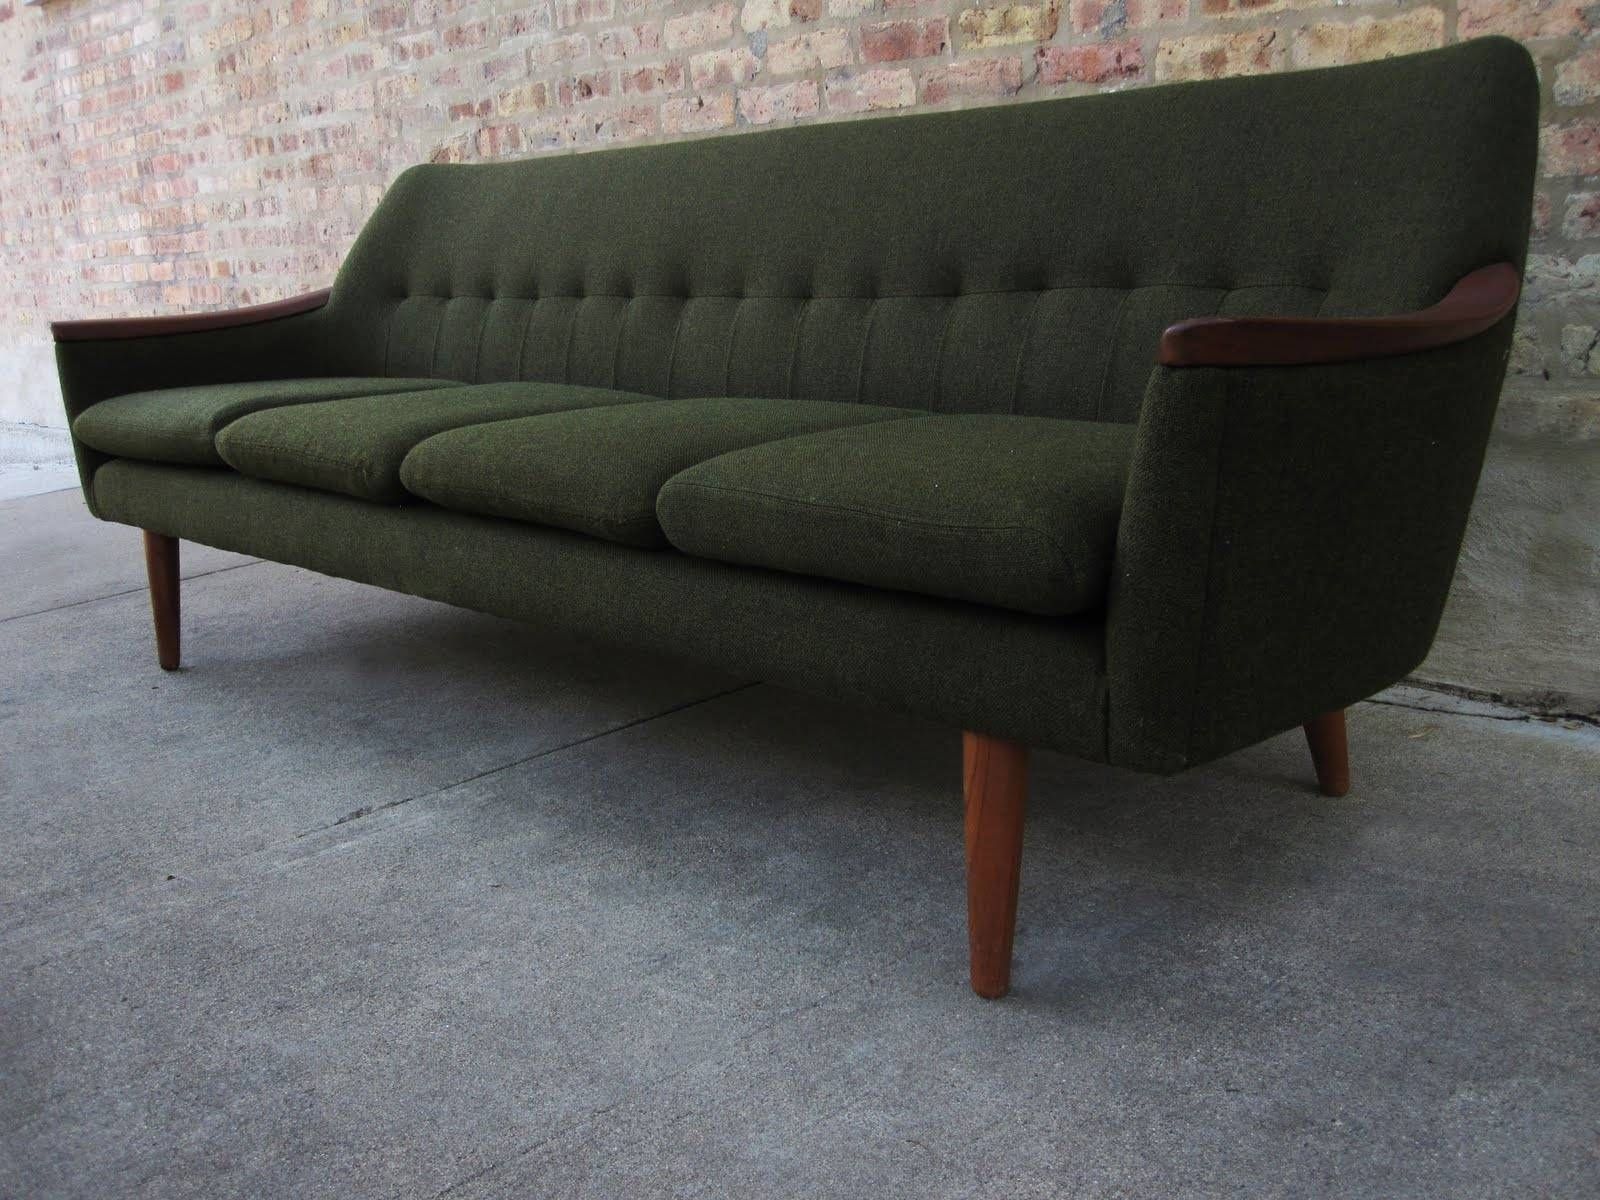 Circa Midcentury: 'danish Modern' Teak Sofa | Of Late Sofa2 Regarding Danish Modern Sofas (View 14 of 15)